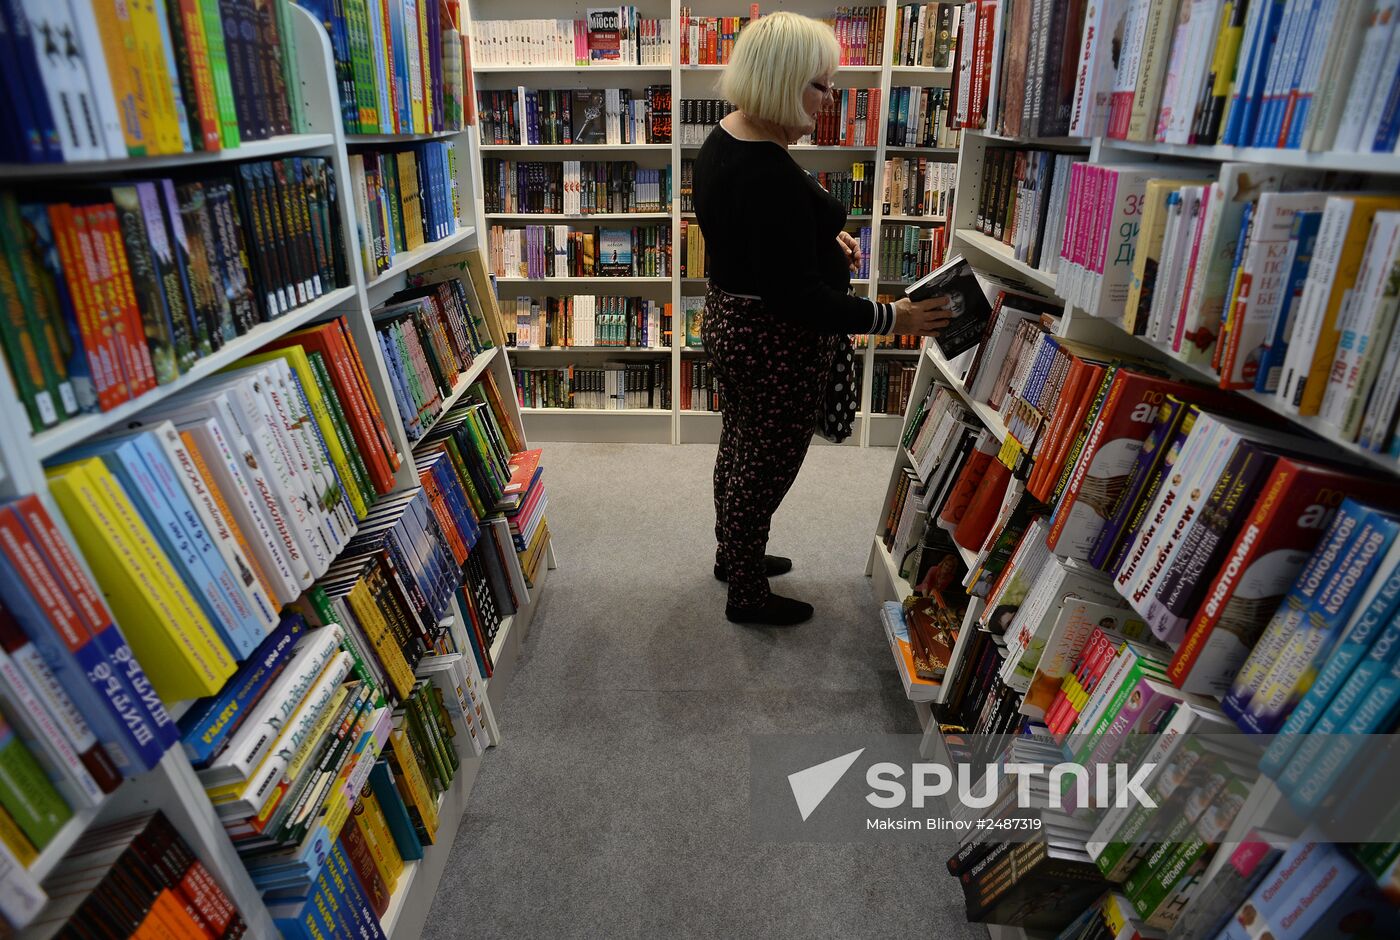 The 27th Moscow International Book Fair